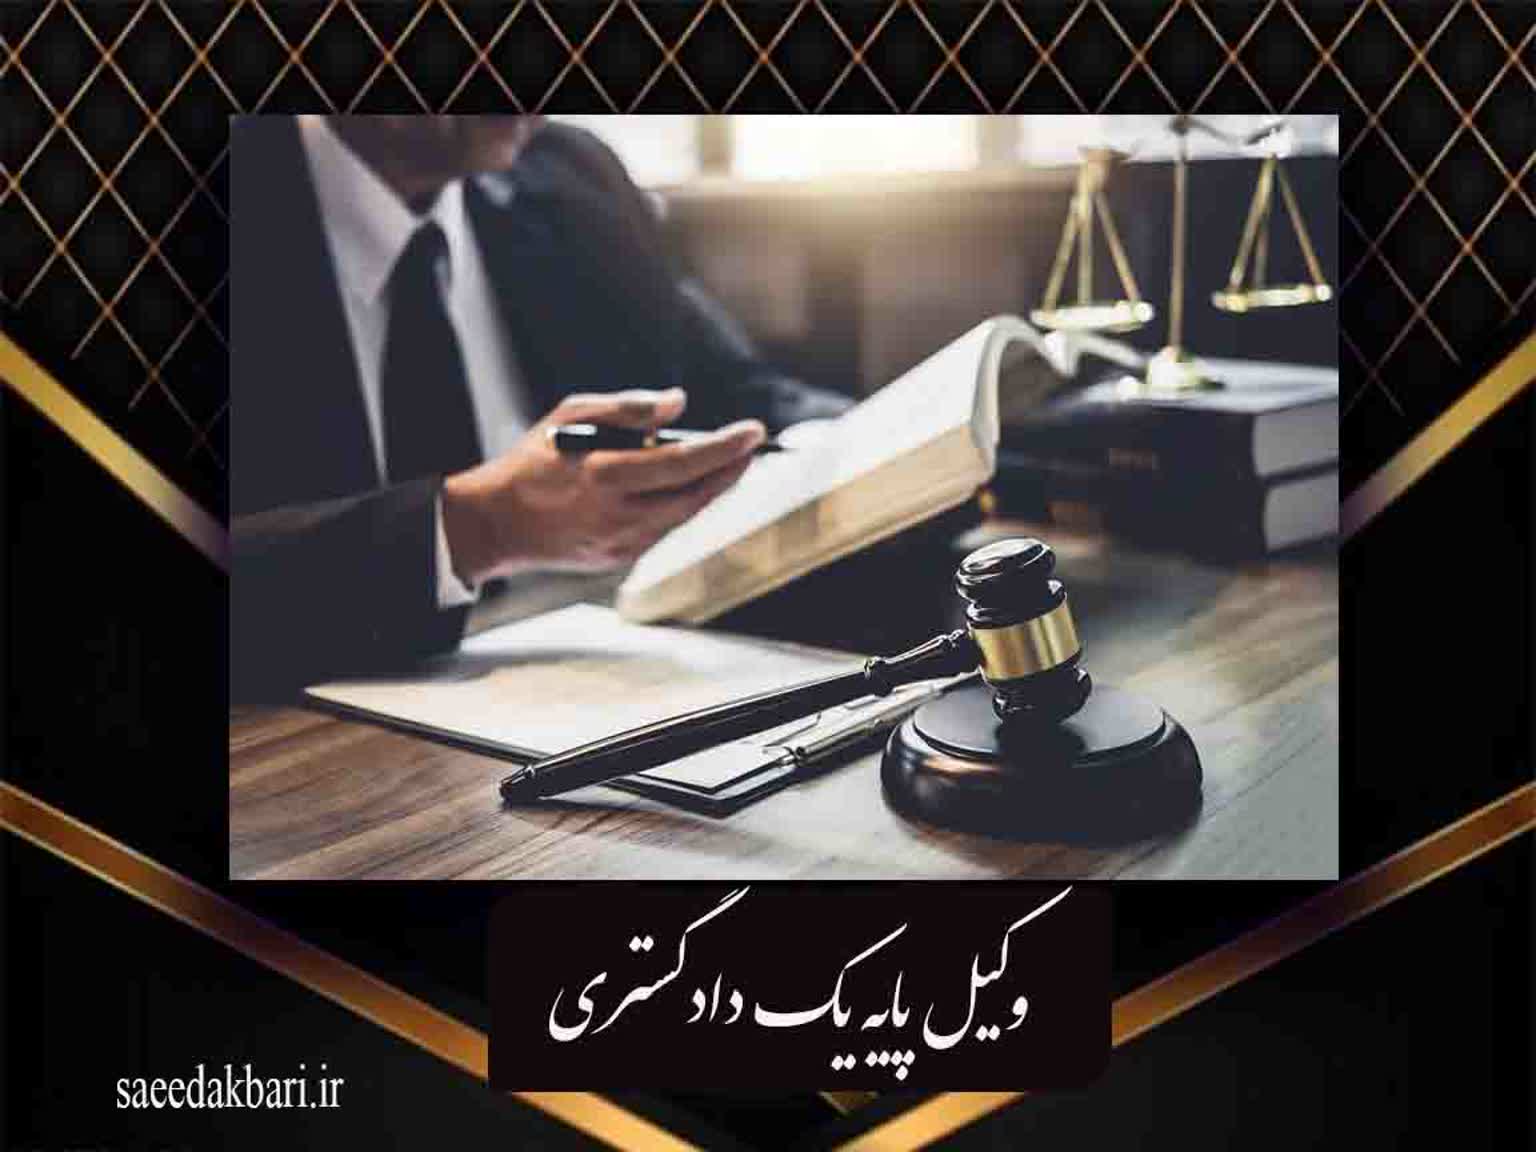 بهترین وکیل کیثفری کرج | وکیل کار بلد | سعید اکبری